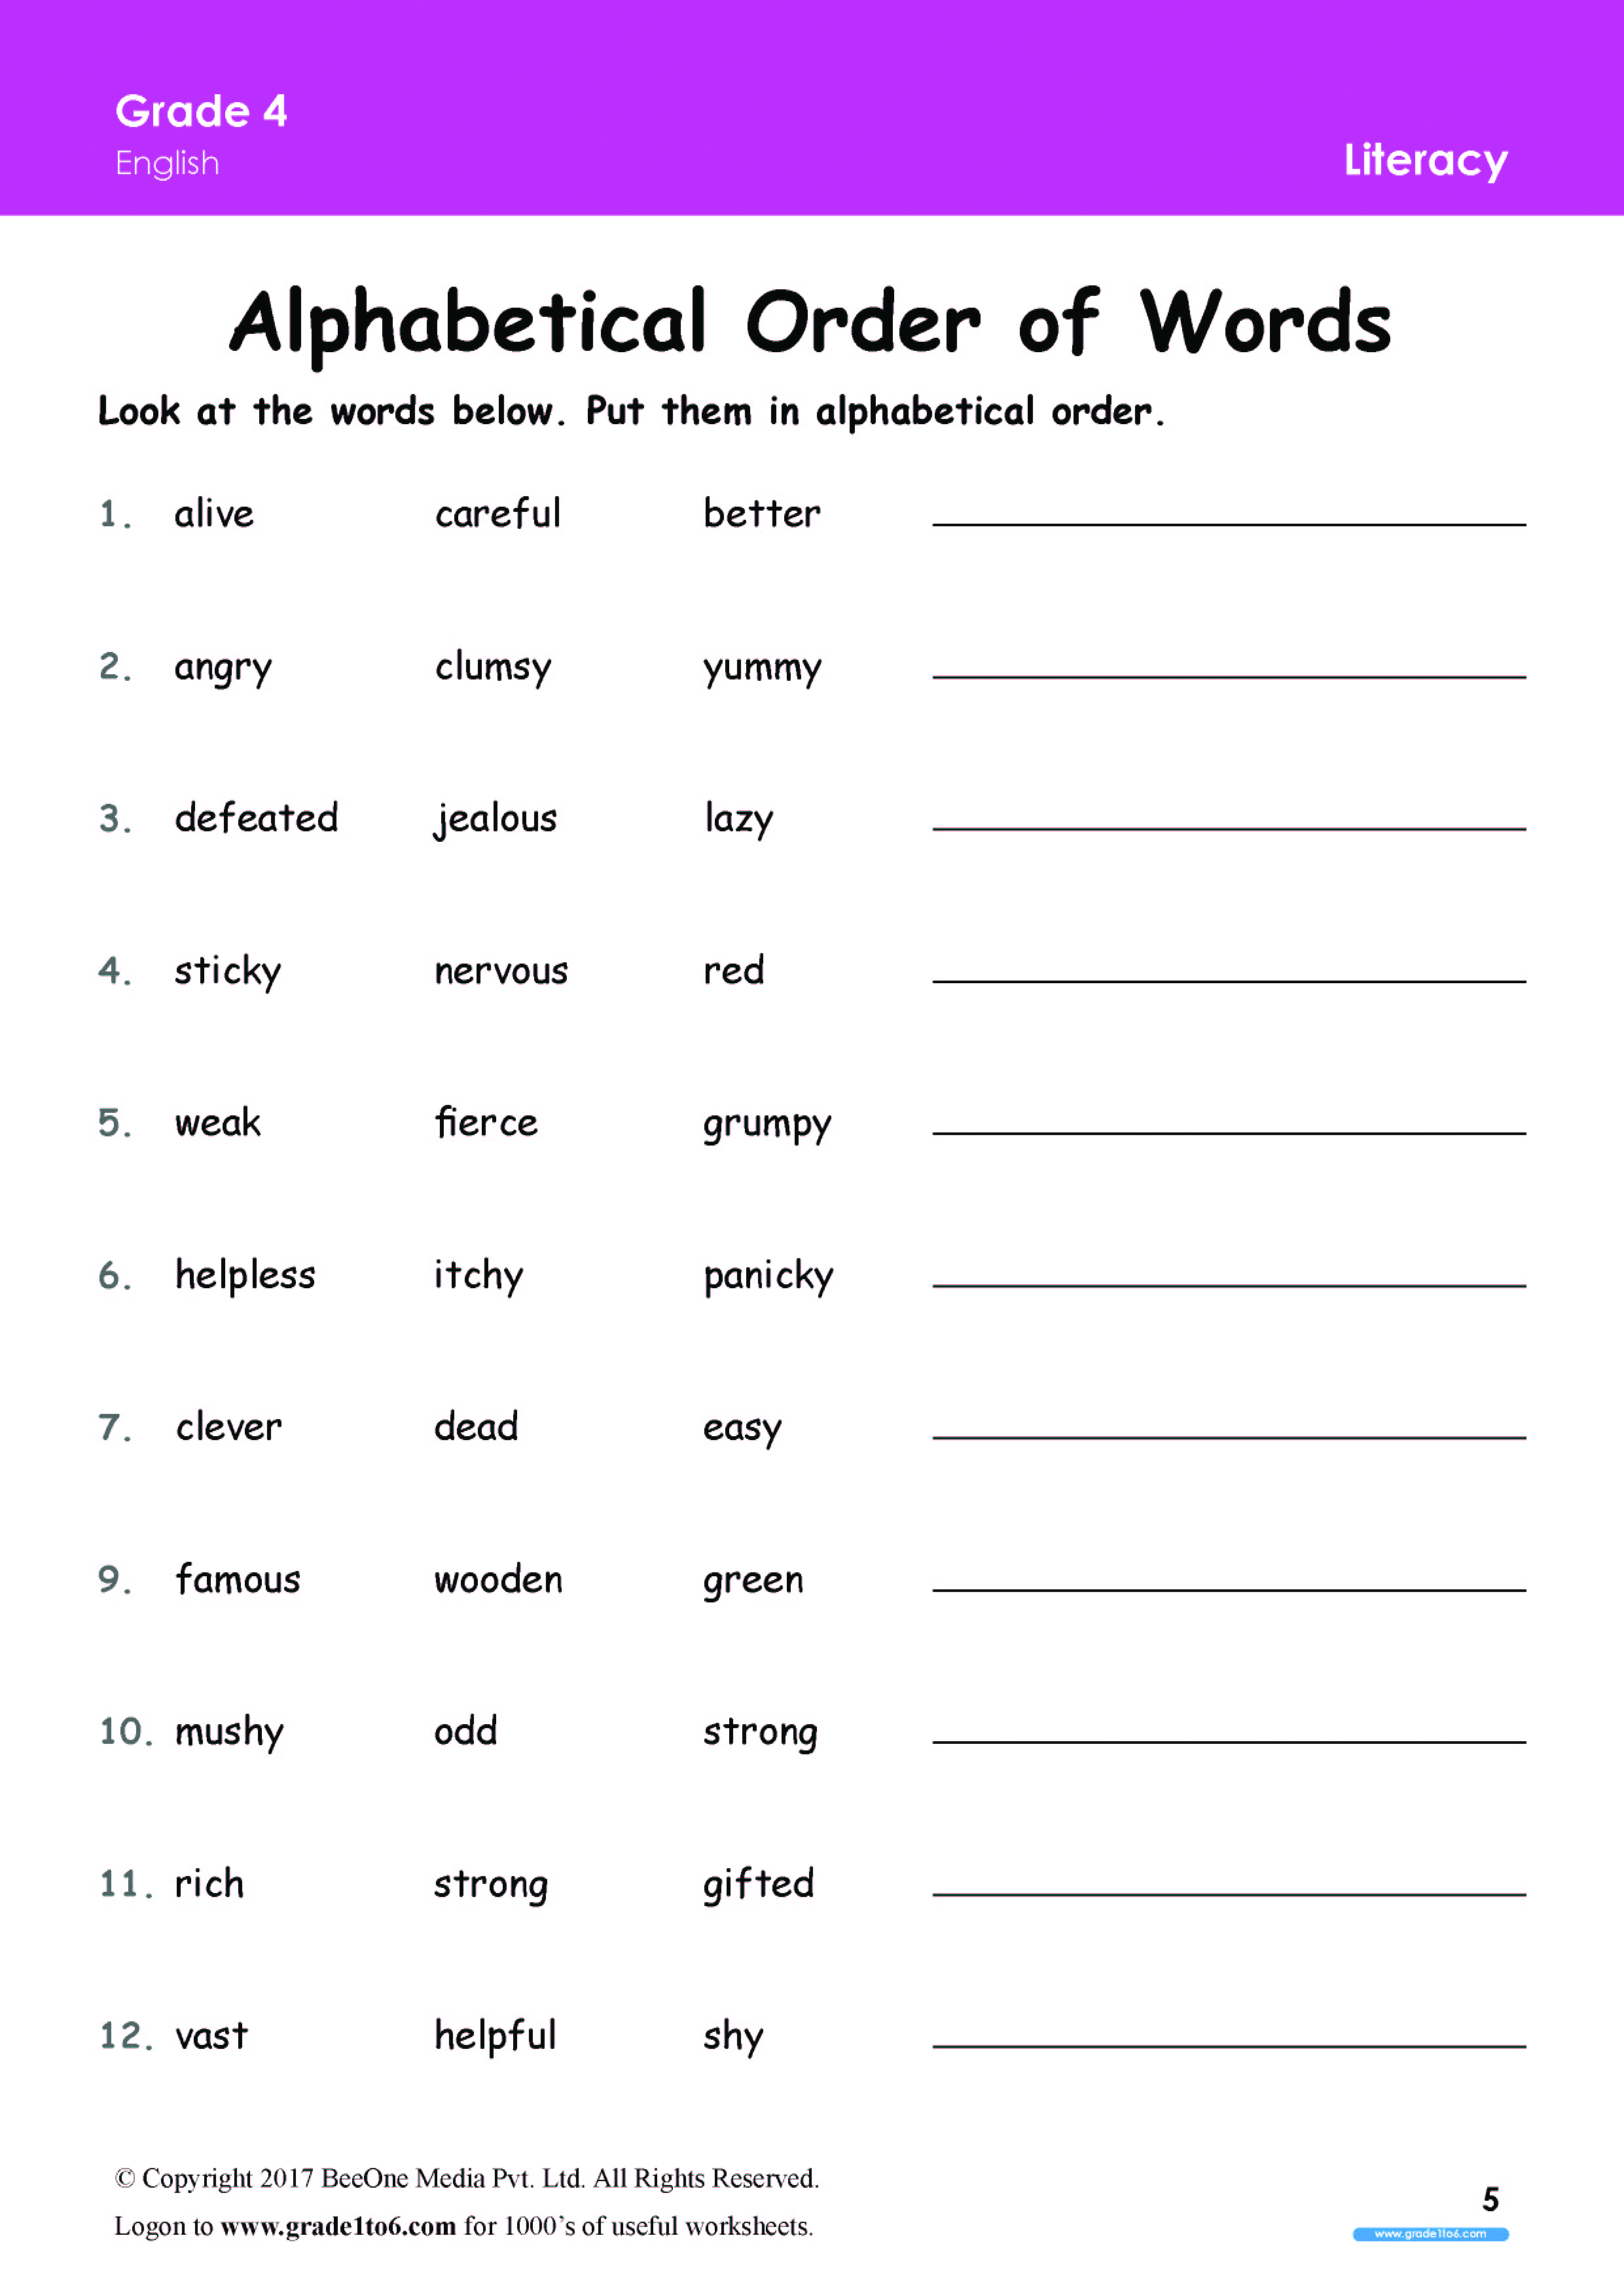 Alphabetical Order Worksheets Grade 4 Www Grade1to6 Com